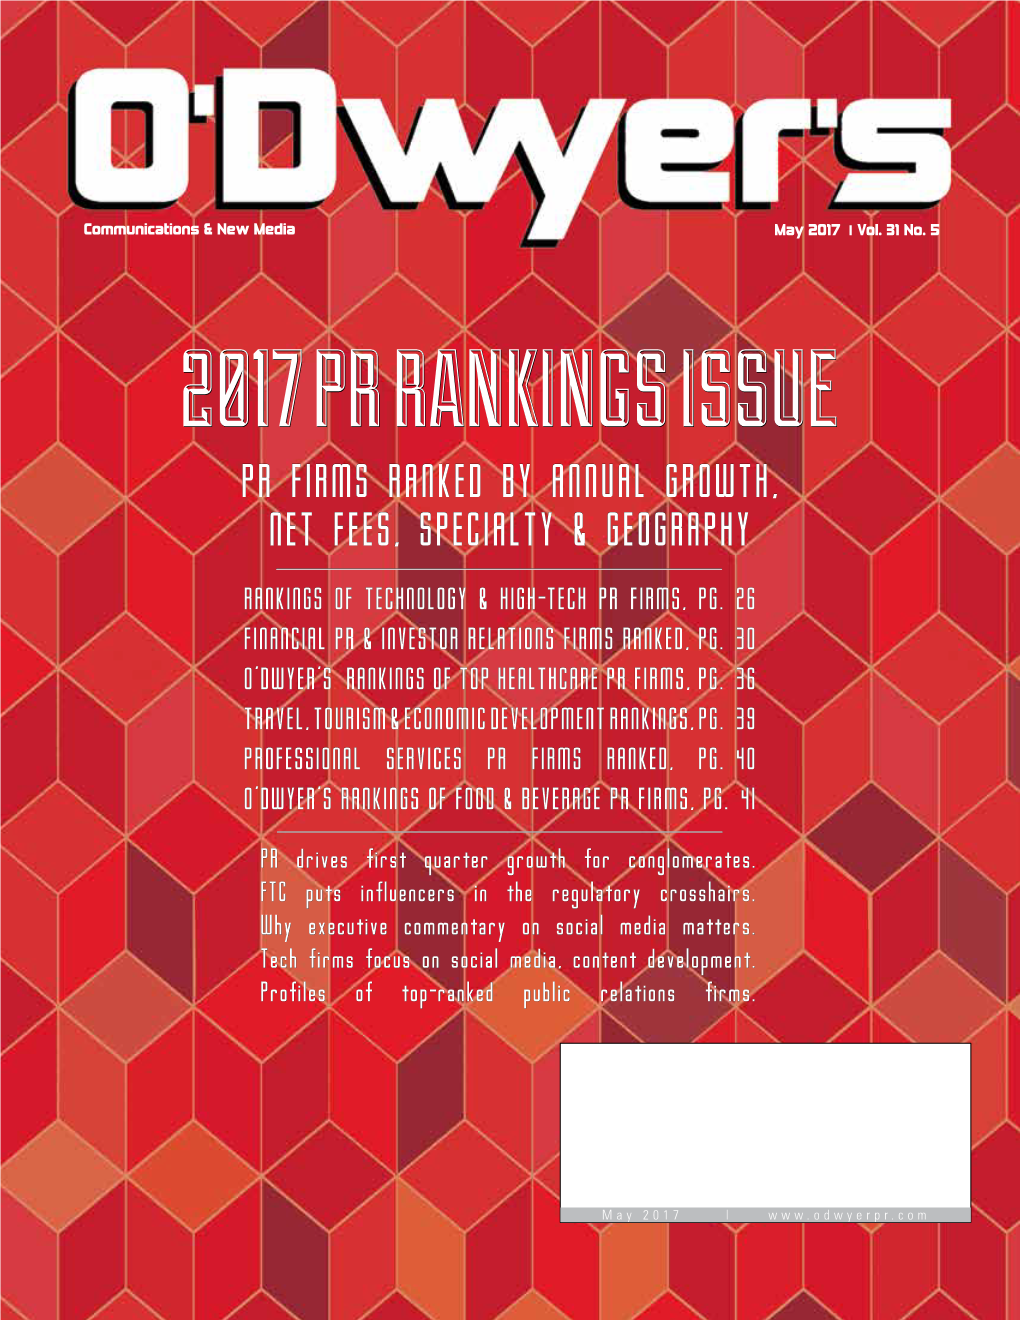 O'dwyer's May '17 PR Firm Rankings Magazine